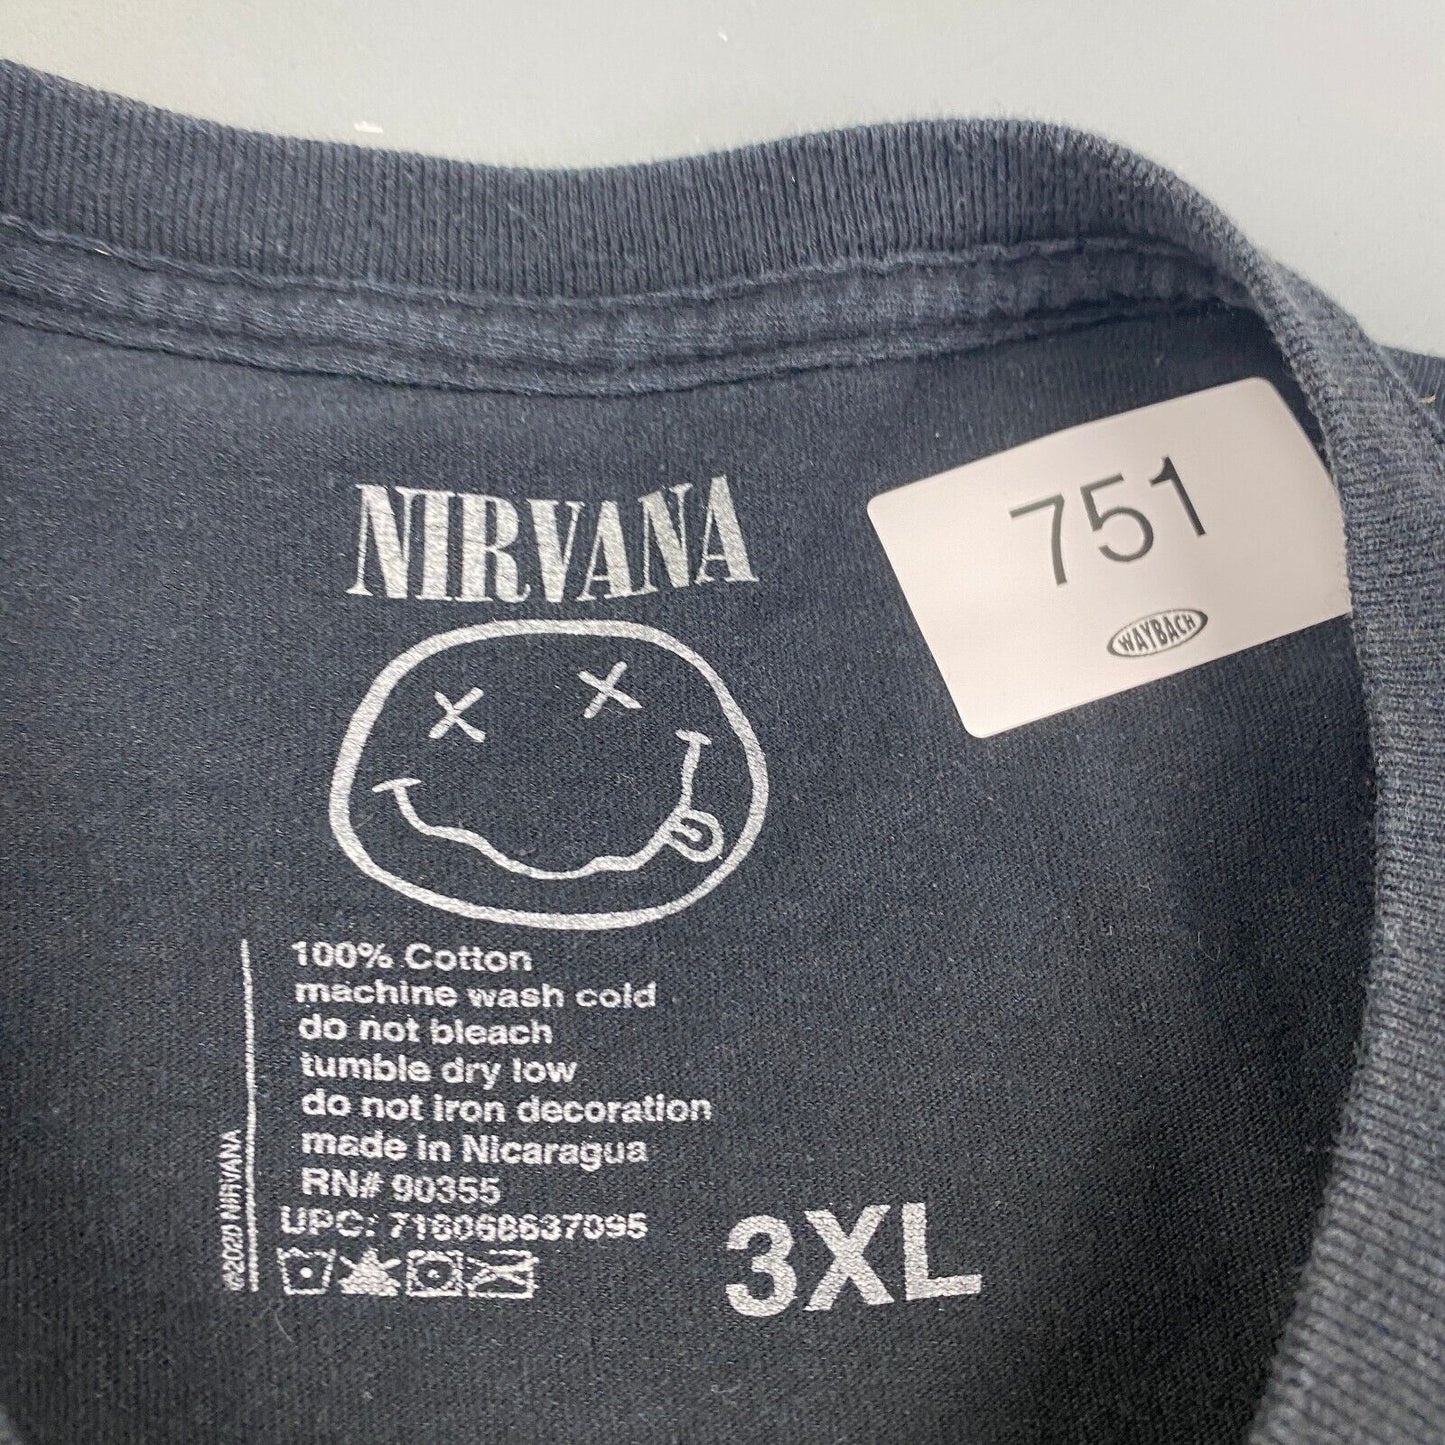 NIRVANA Smiley Face Big Graphic Black Band T-Shirt sz 3XL Men Adult